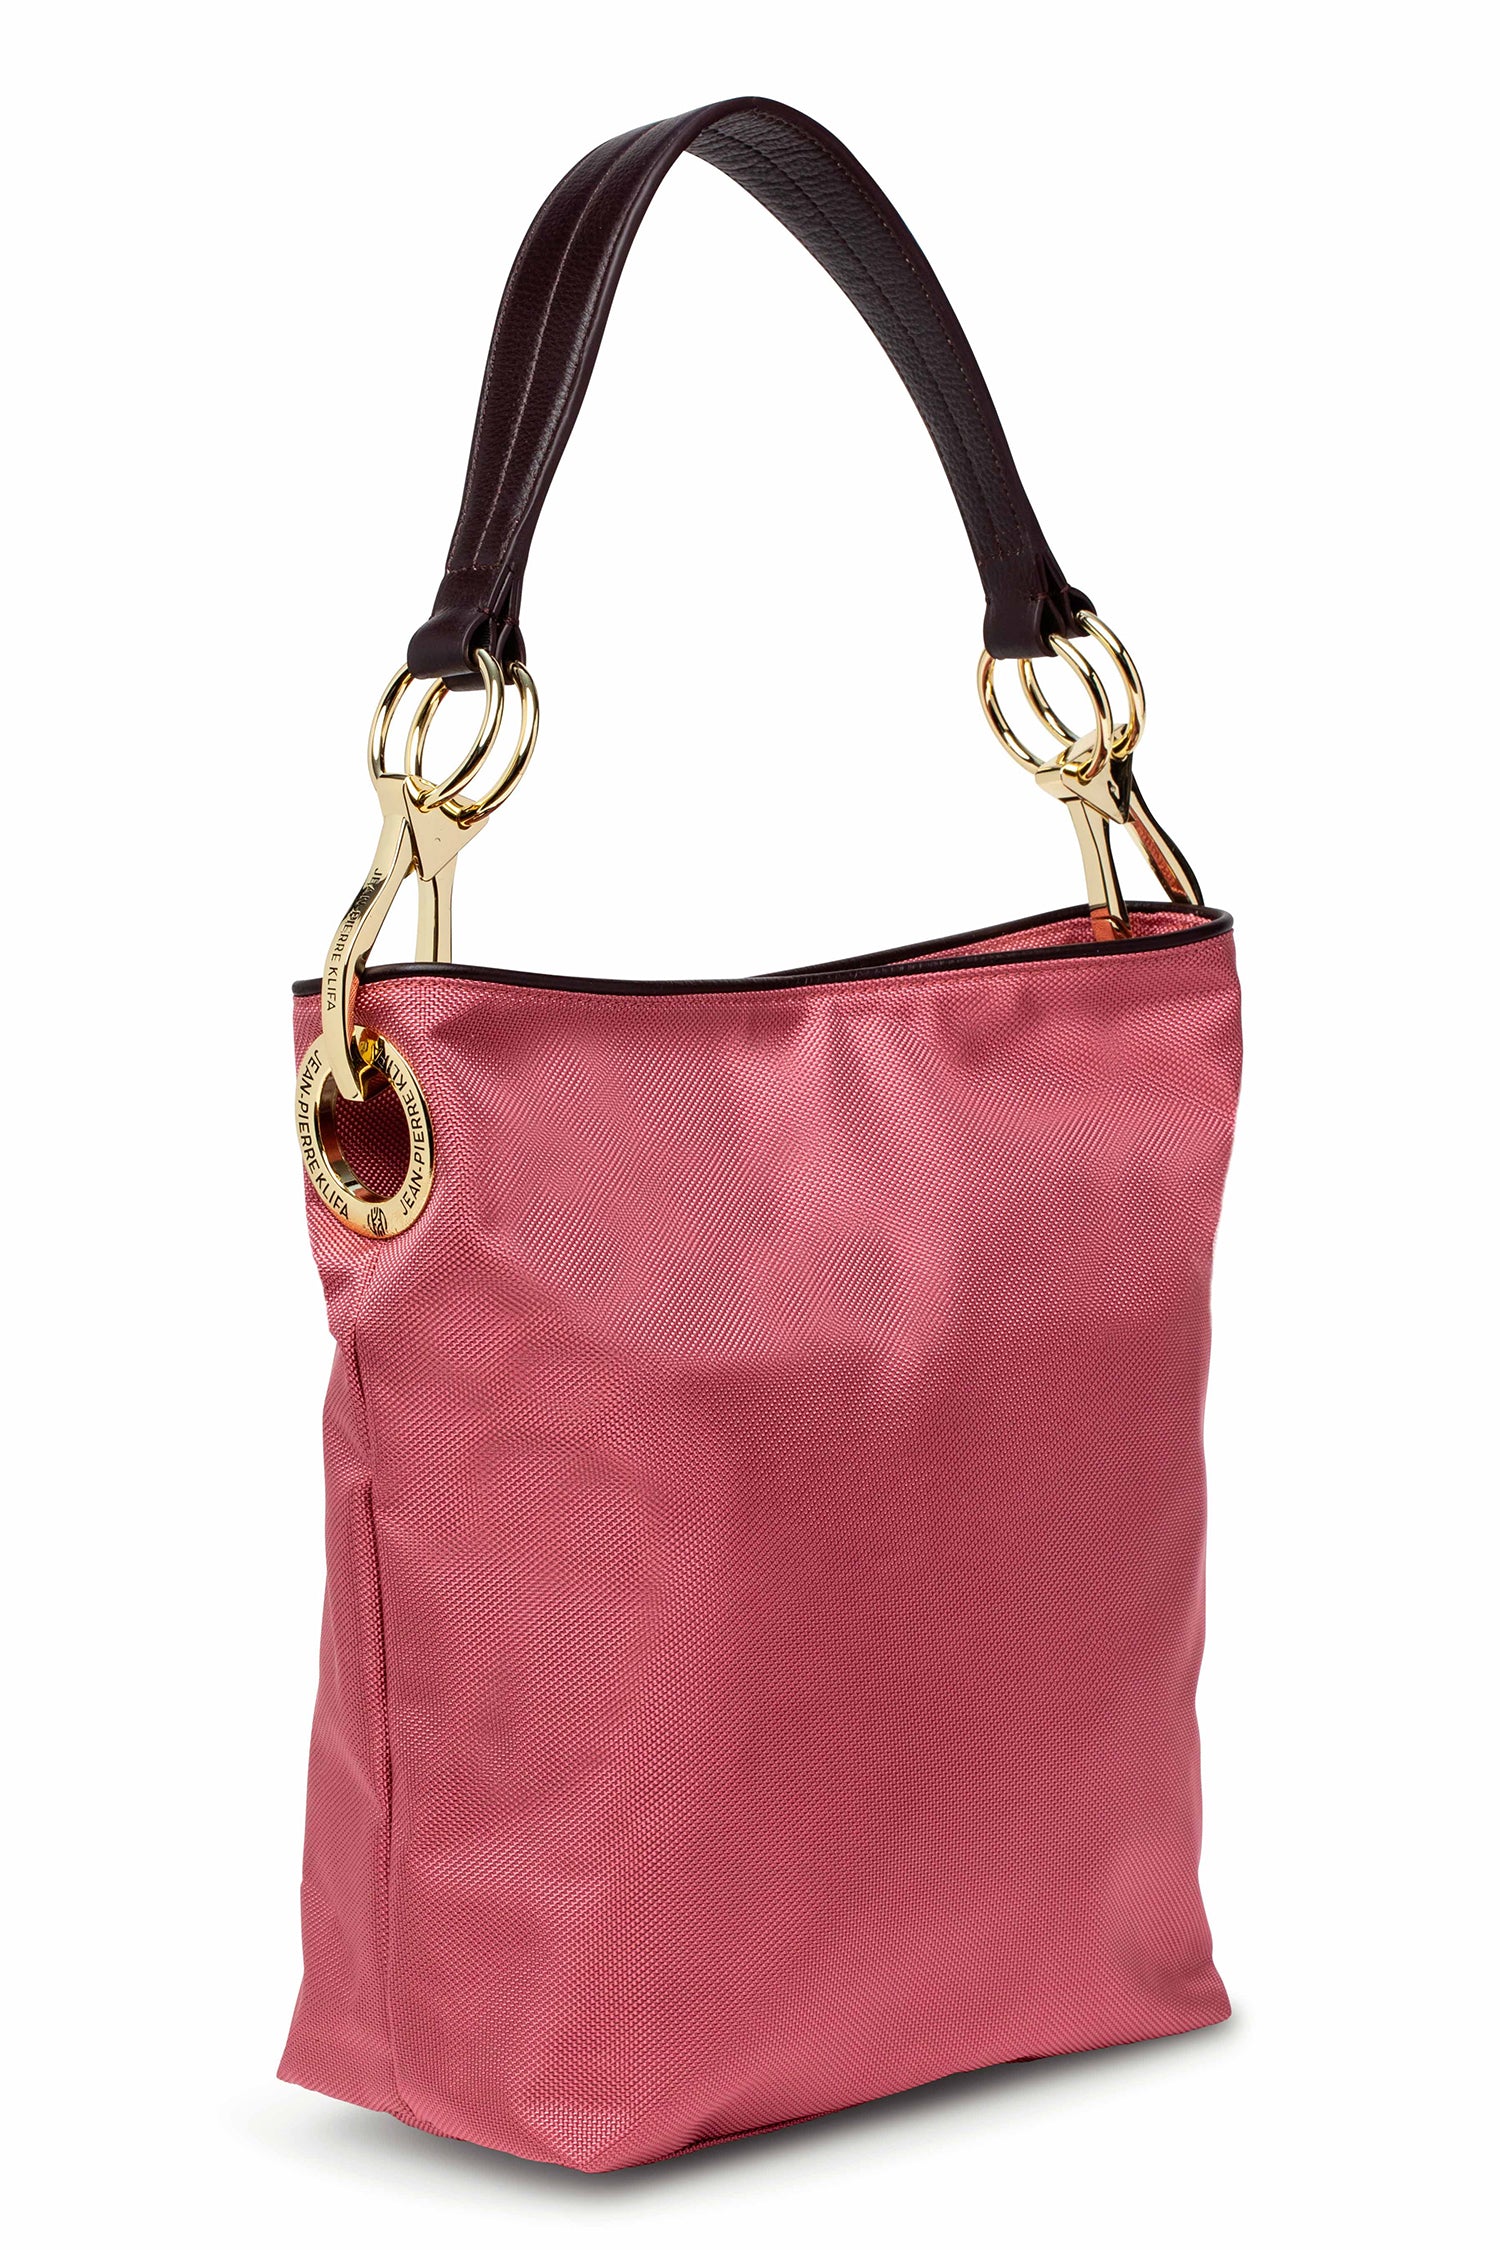 Nylon Bucket Bag Lace Pink Handbag Jean-Pierre Klifa   